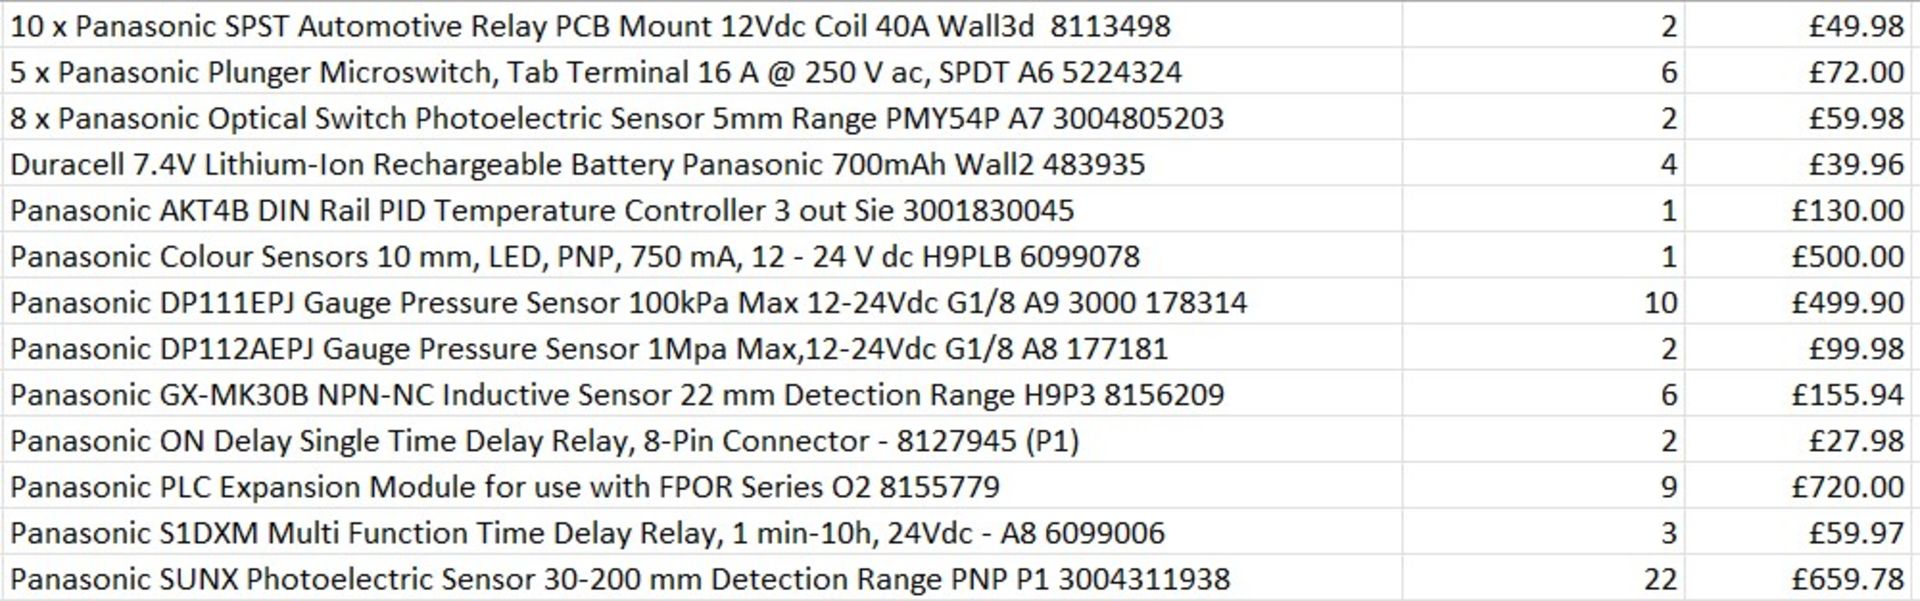 £3k worth of Panasonic items across 13 products - sensors / expansion module etc